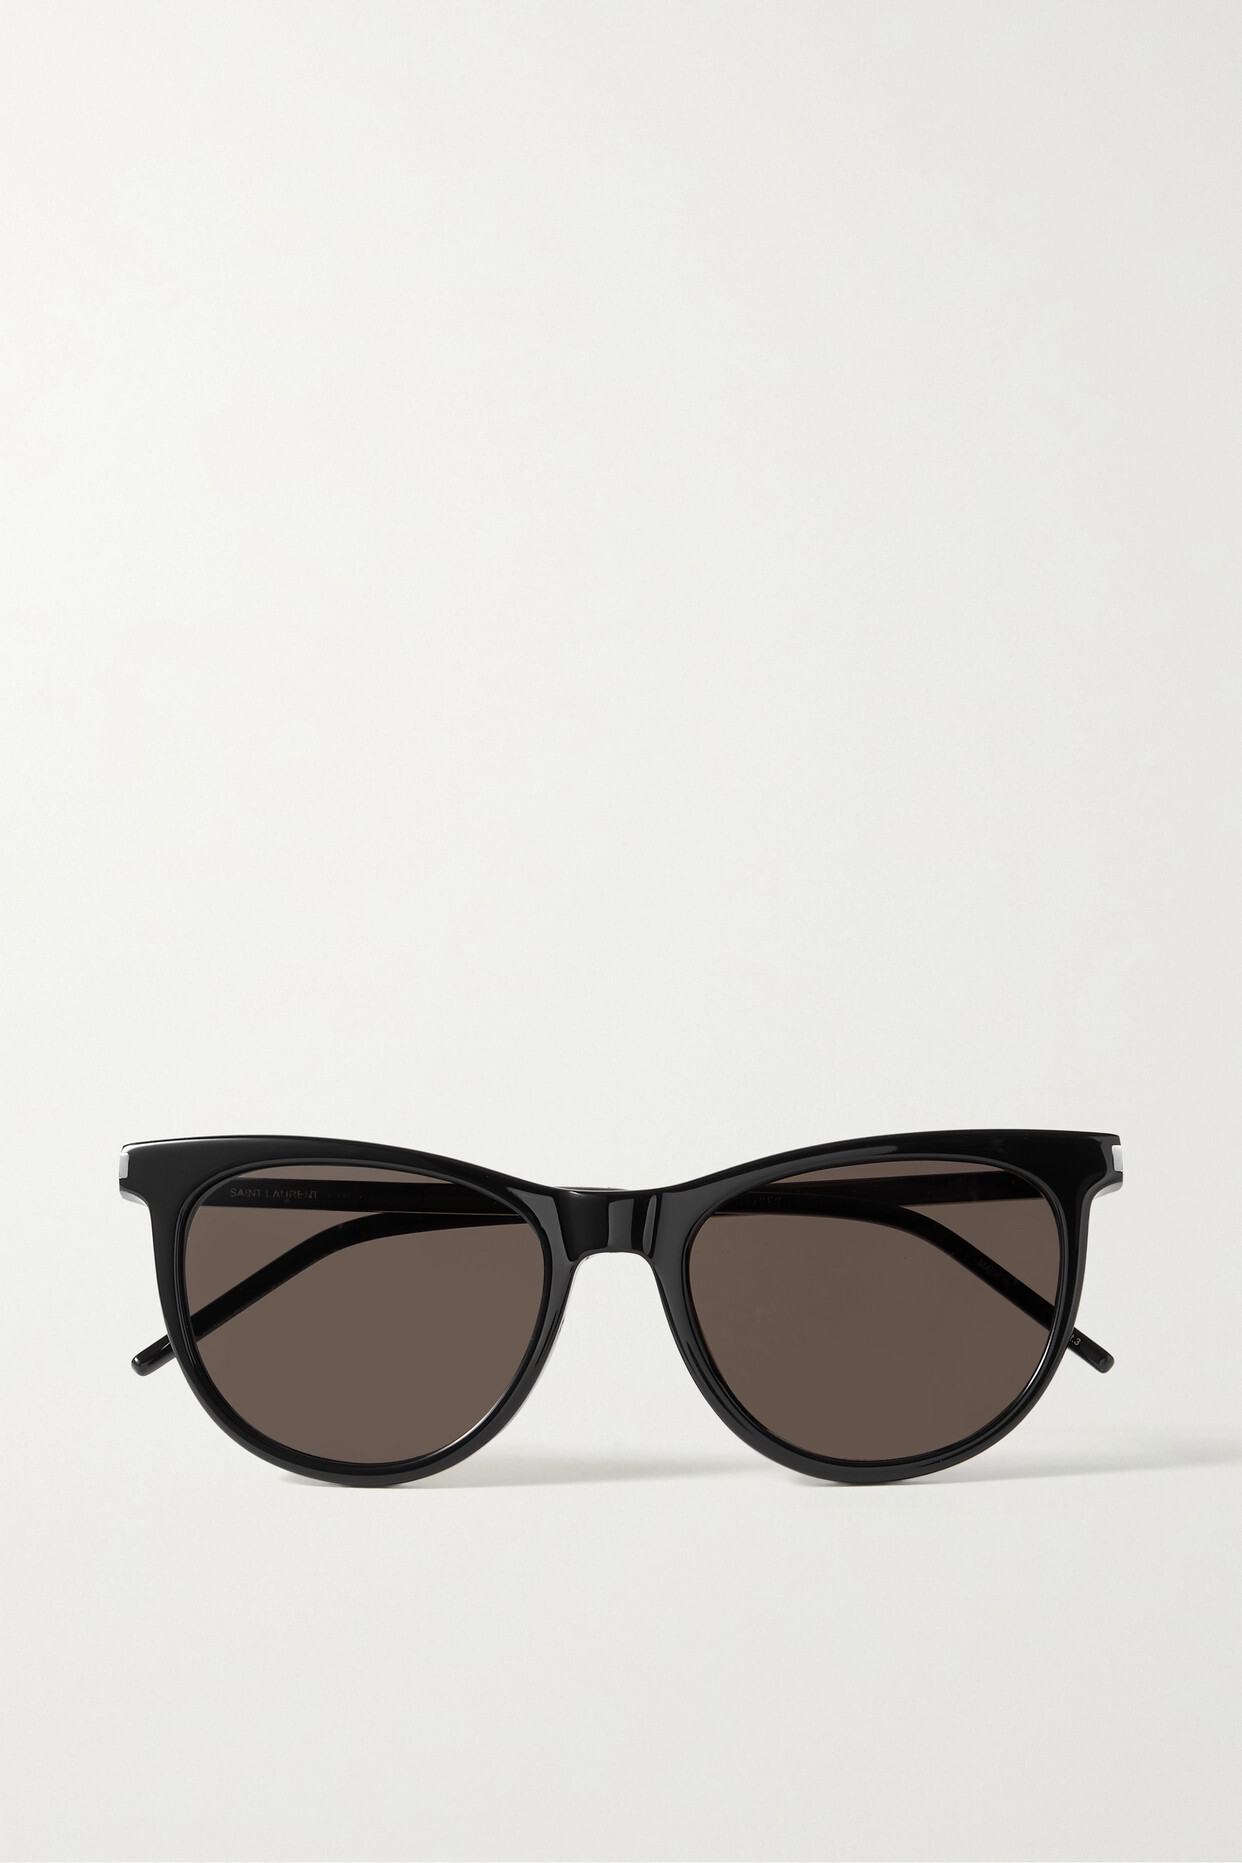 SAINT LAURENT Eyewear - Cat-eye Acetate And Silver-tone Sunglasses - Black